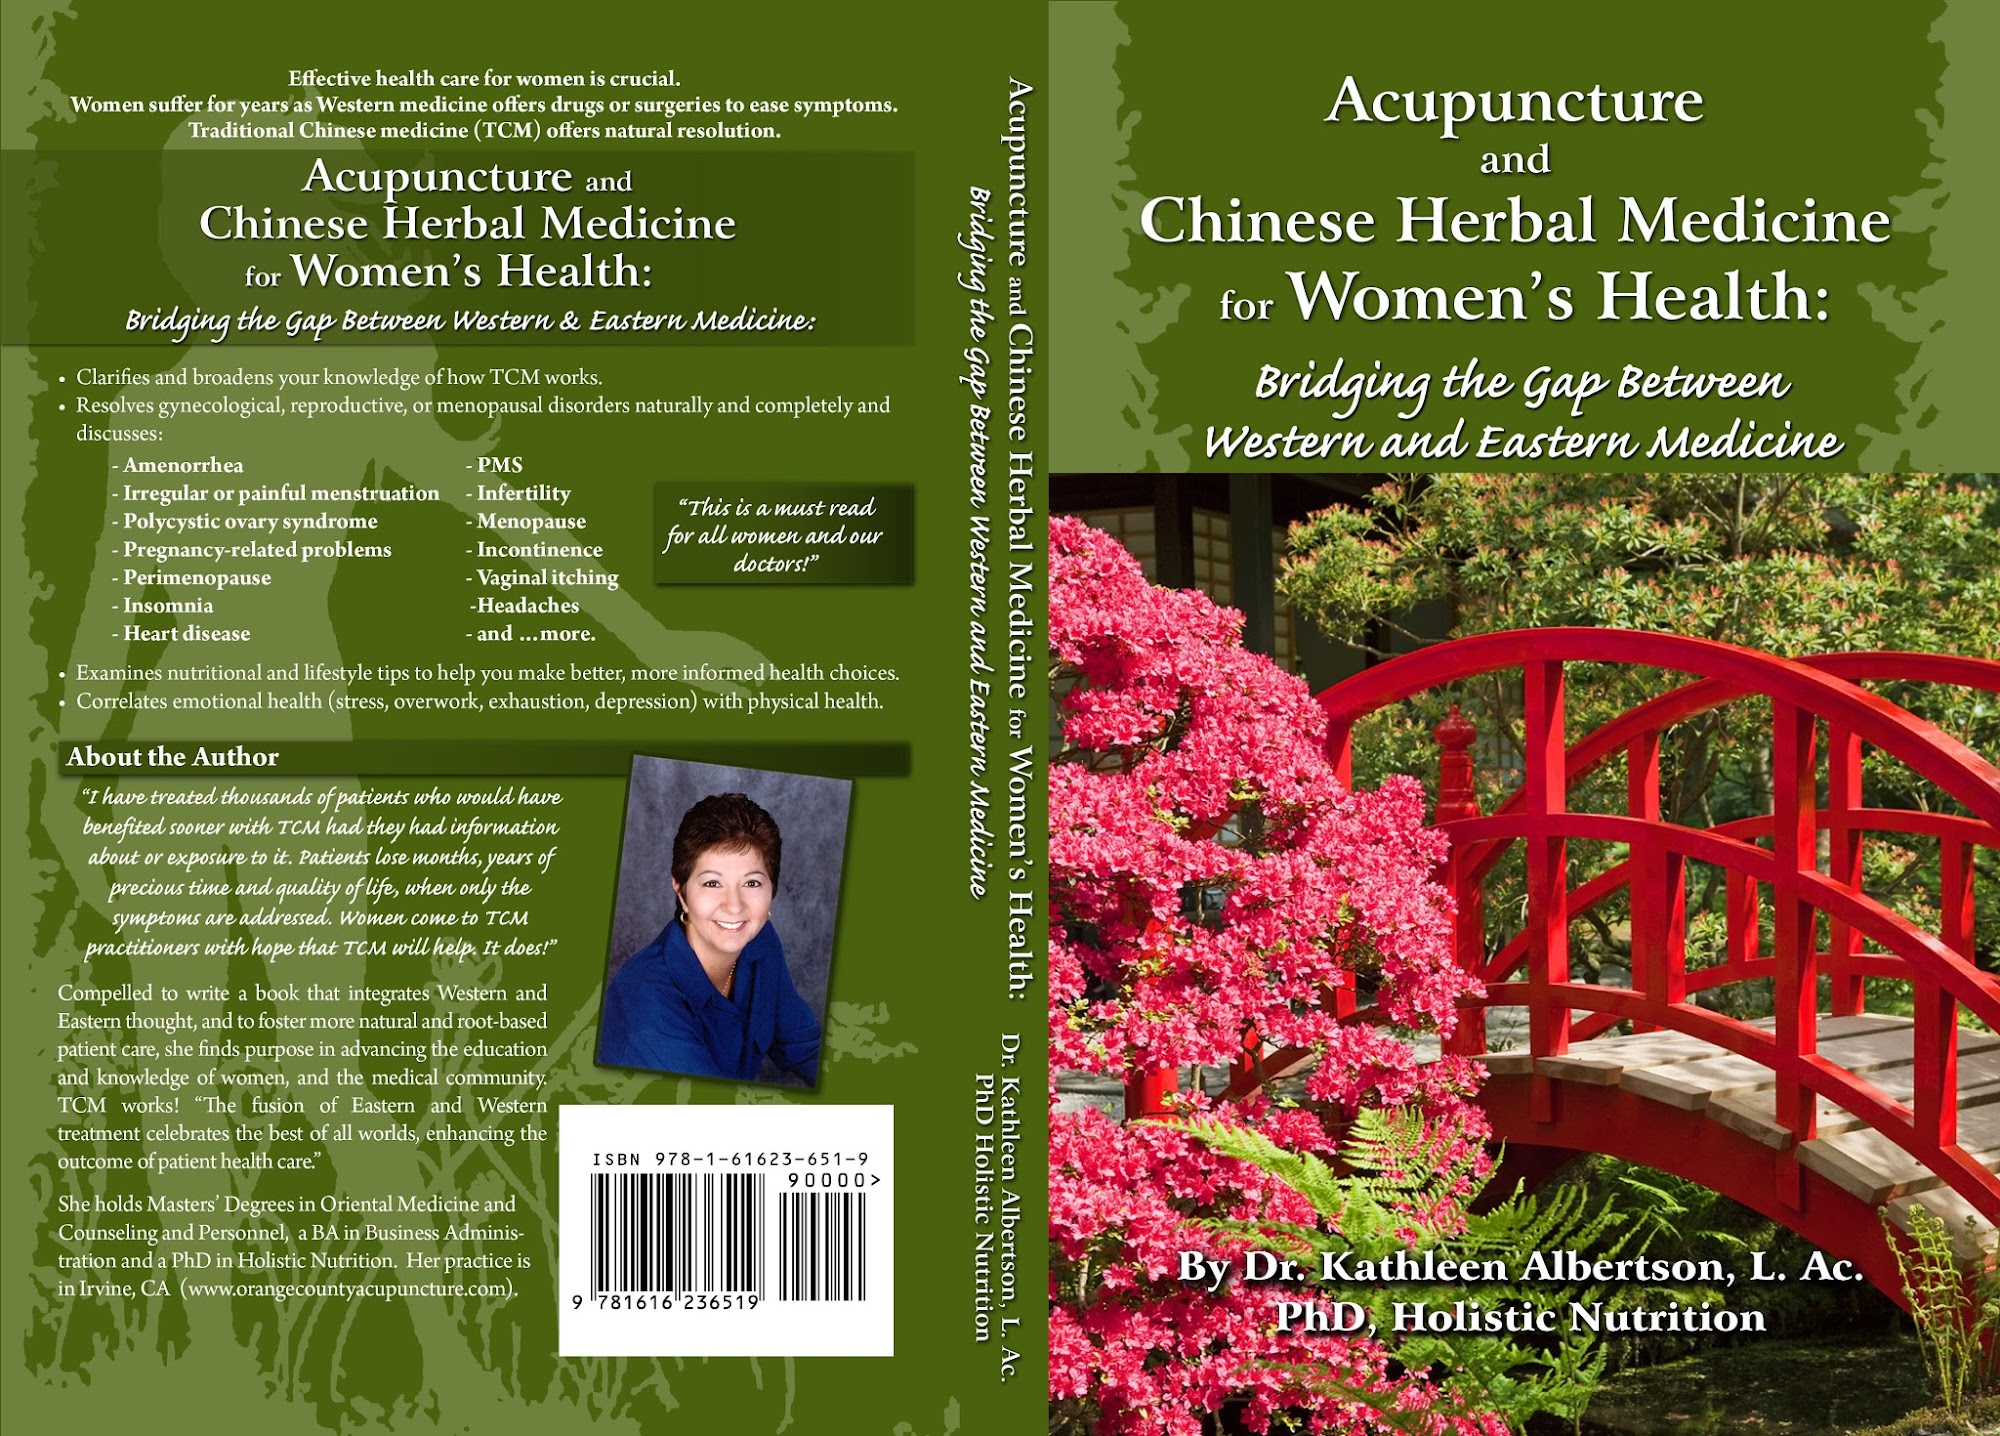 Kathleen Albertson, L. Ac. Albertson Acupuncture & Herbal Care, Inc.